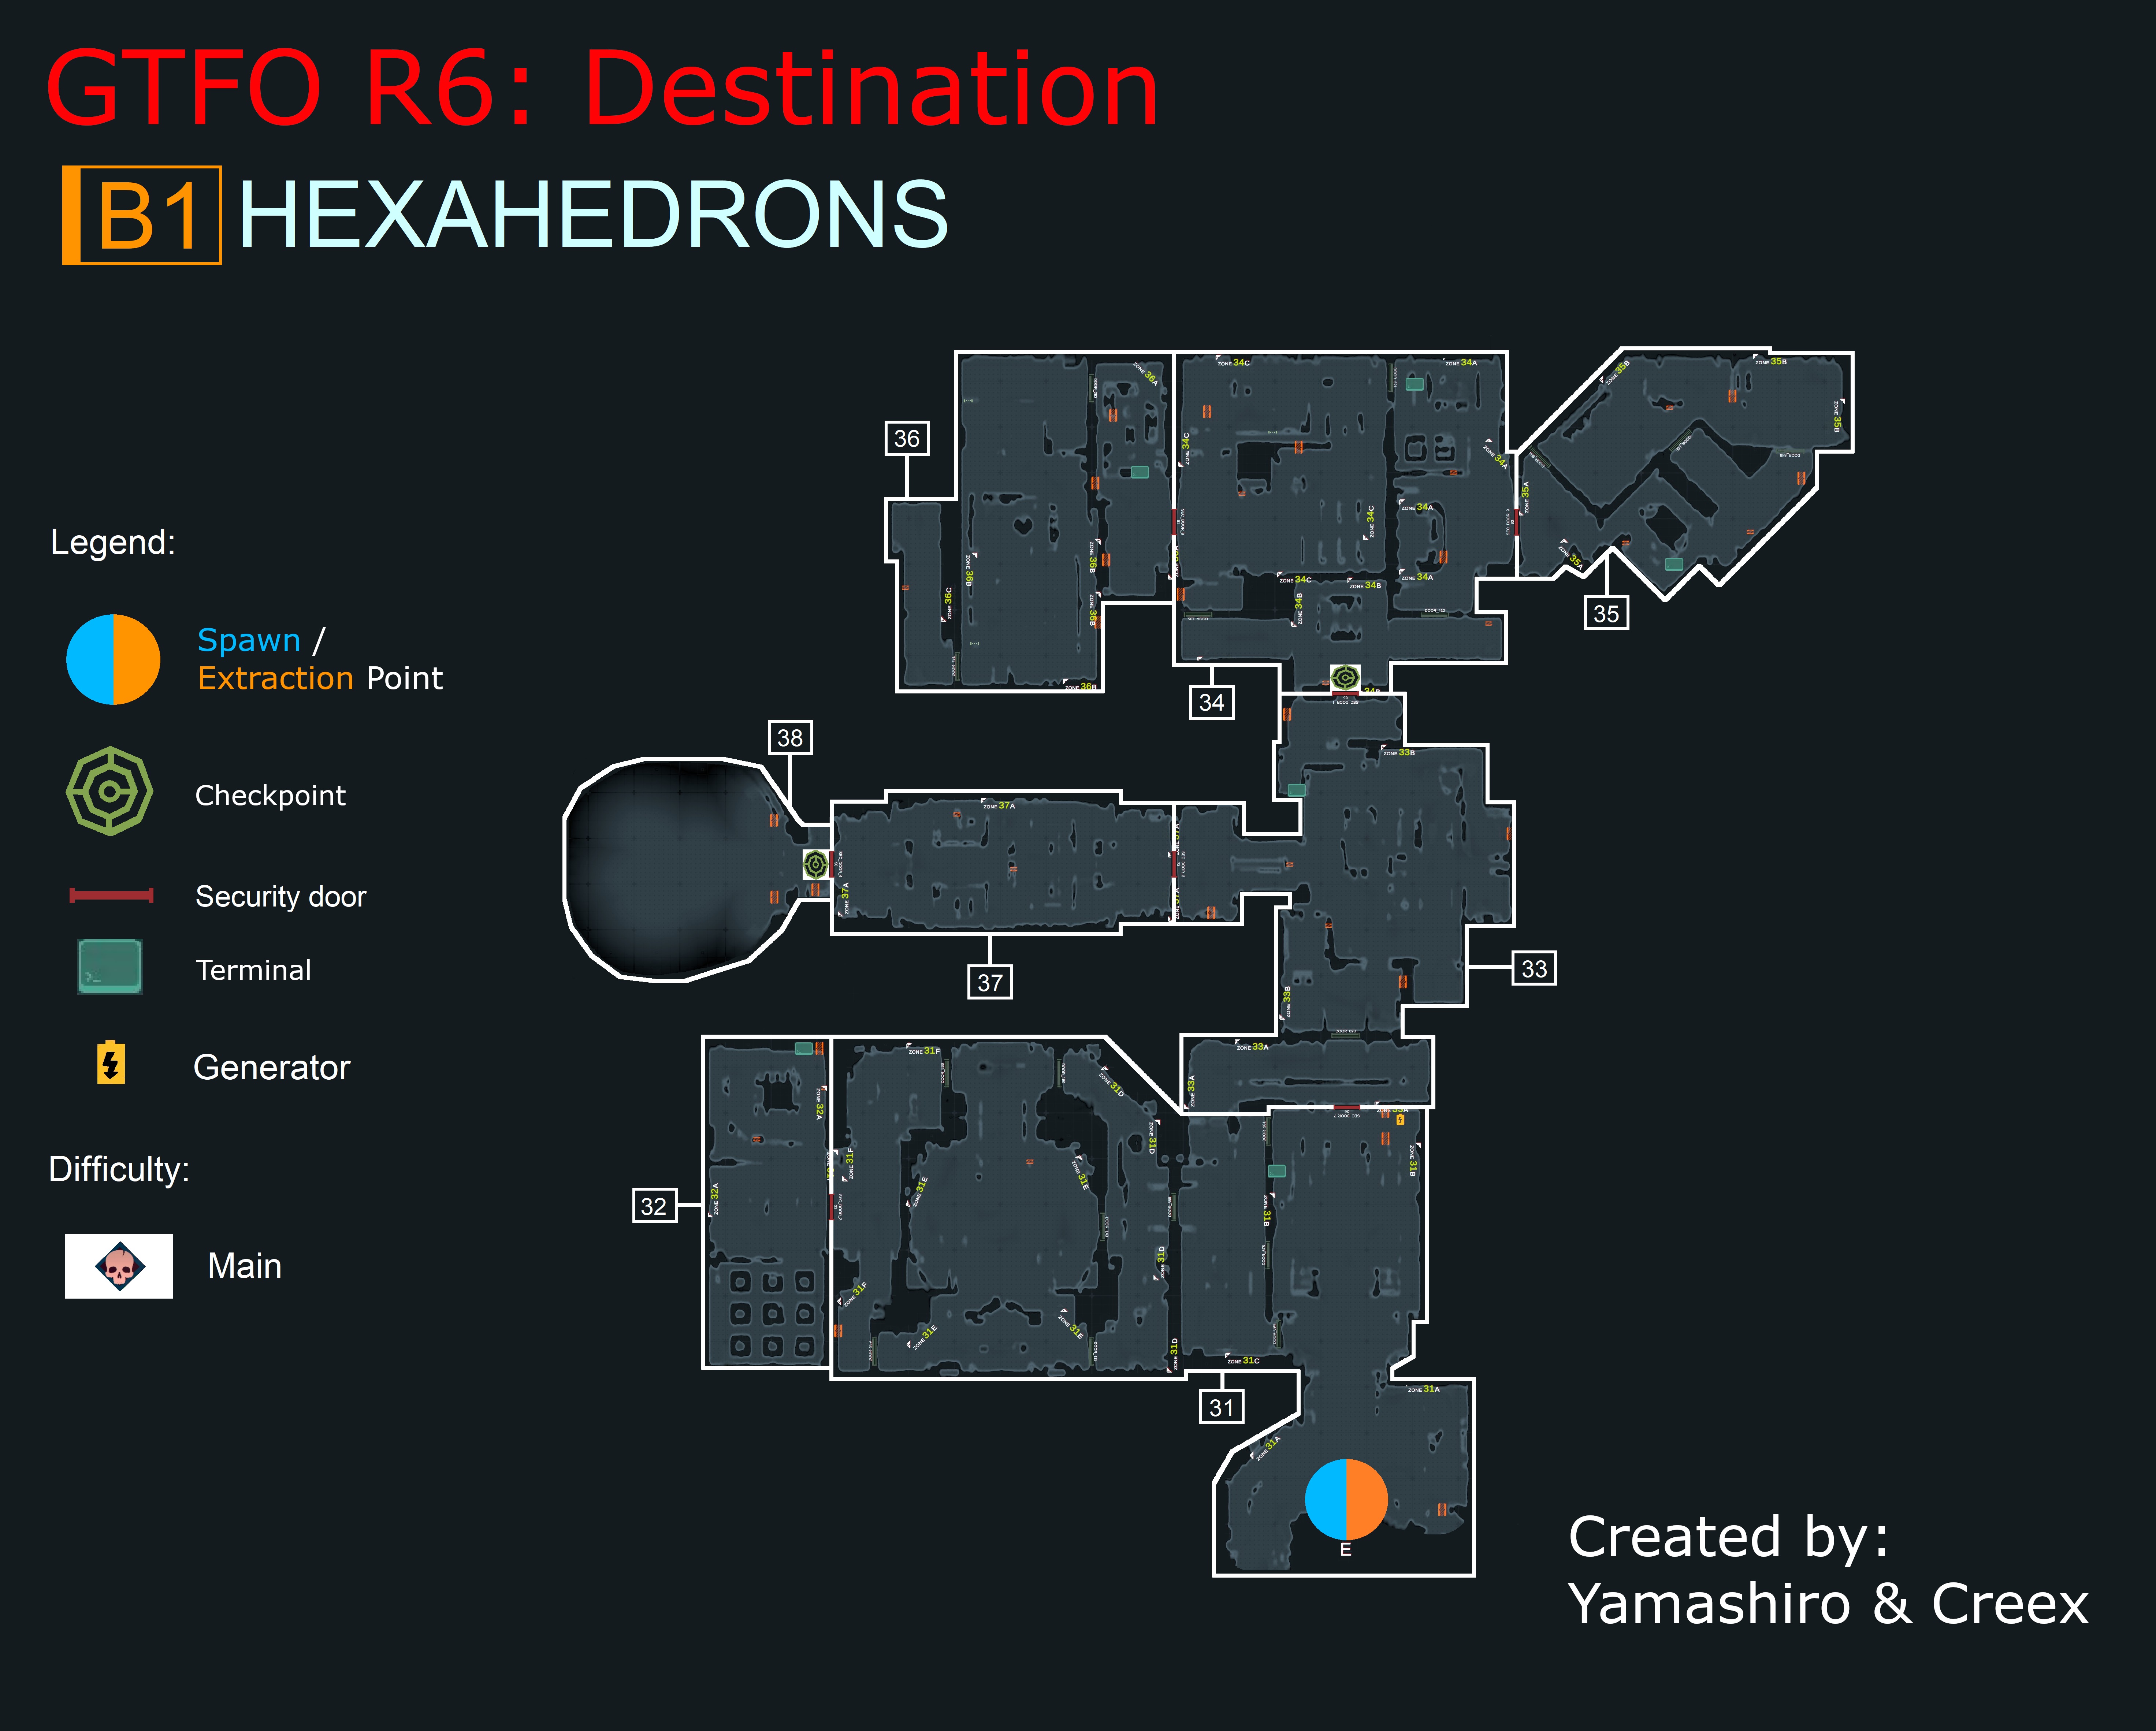 GTFO 6 Maps in High Quality Image - R6B1 - E355DC4